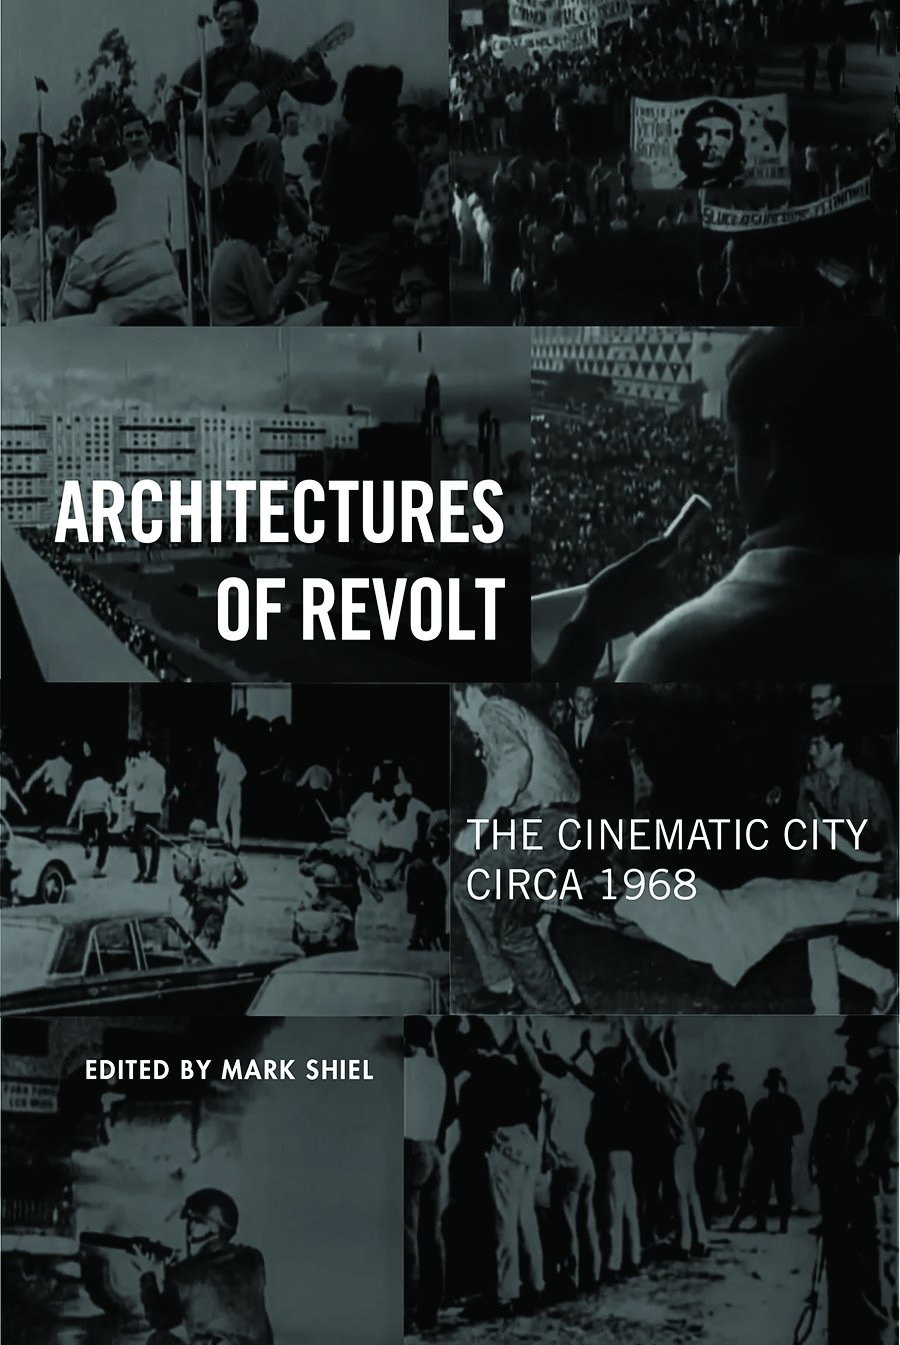 Shiel, Mark - Architectures of Revolt: The Cinematic City Circa 1968 (2018) logo